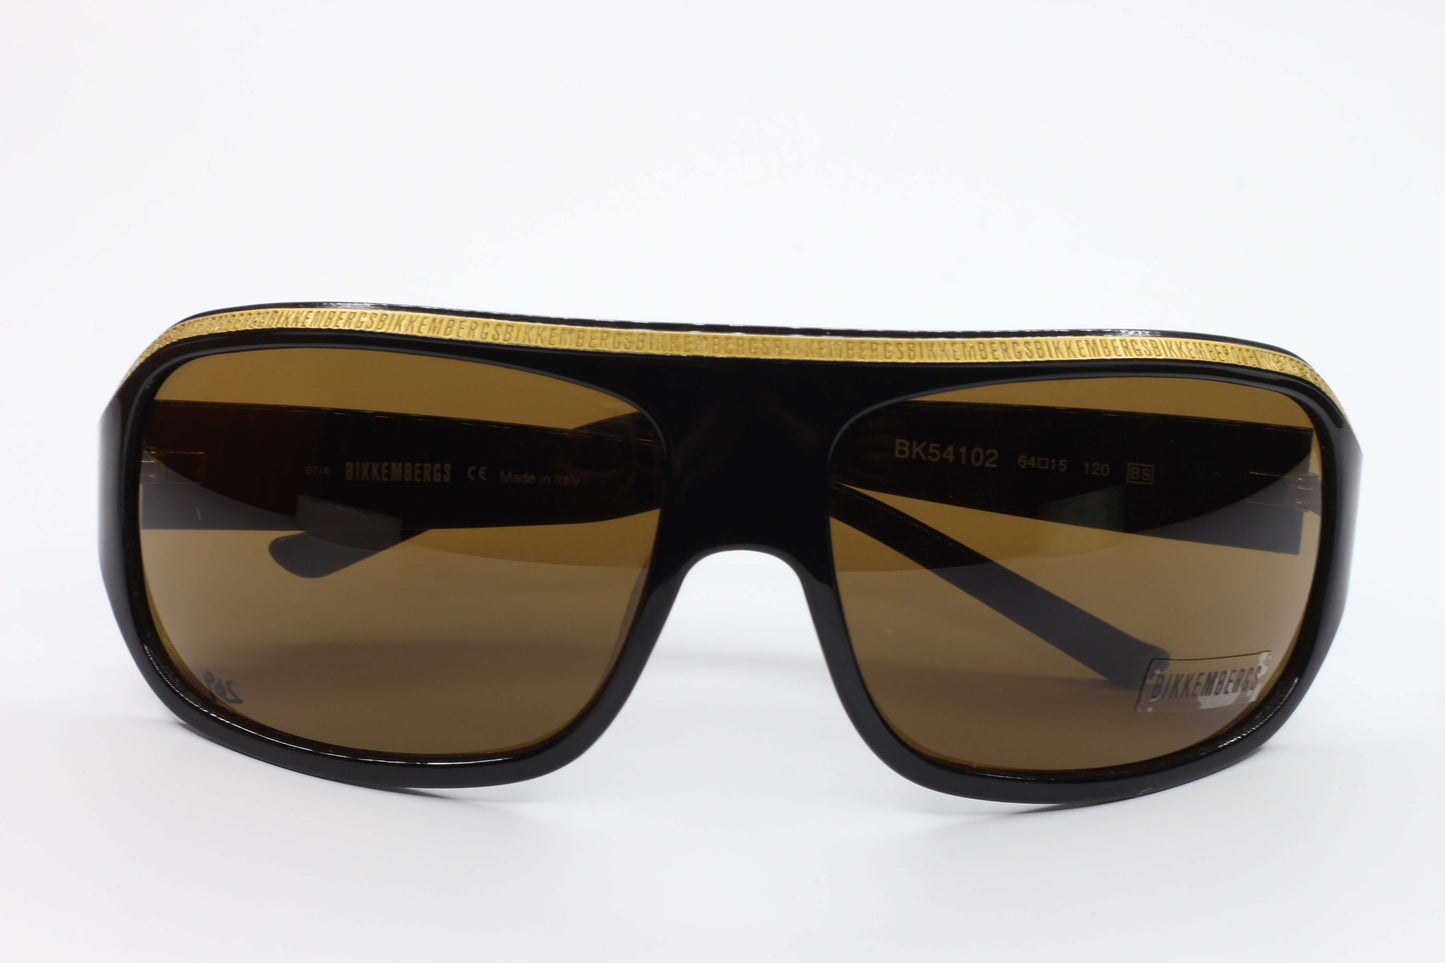 Bikkembergs BK54102 07/4 Black Gold Wrap Acetate Sunglasses - sunglasses, Women